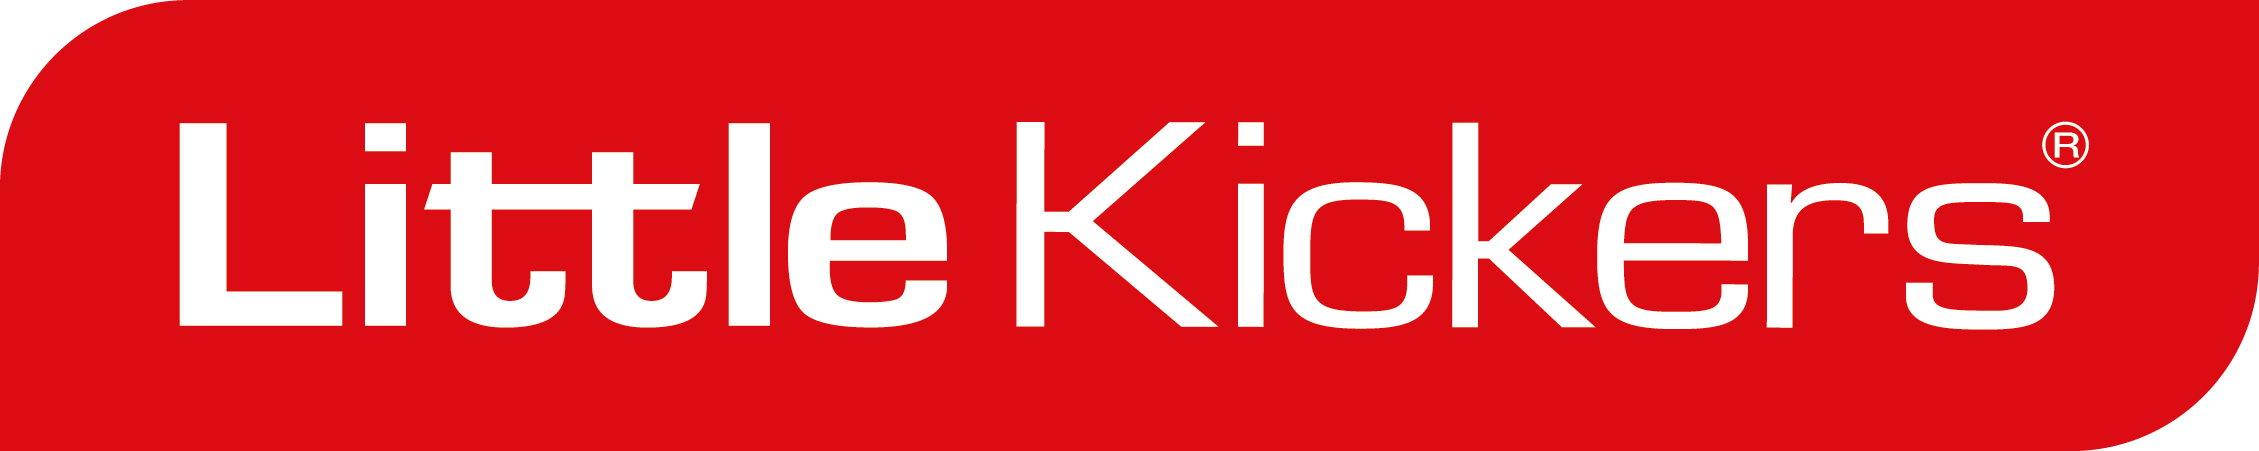 Little Kickers Football Classes's logo